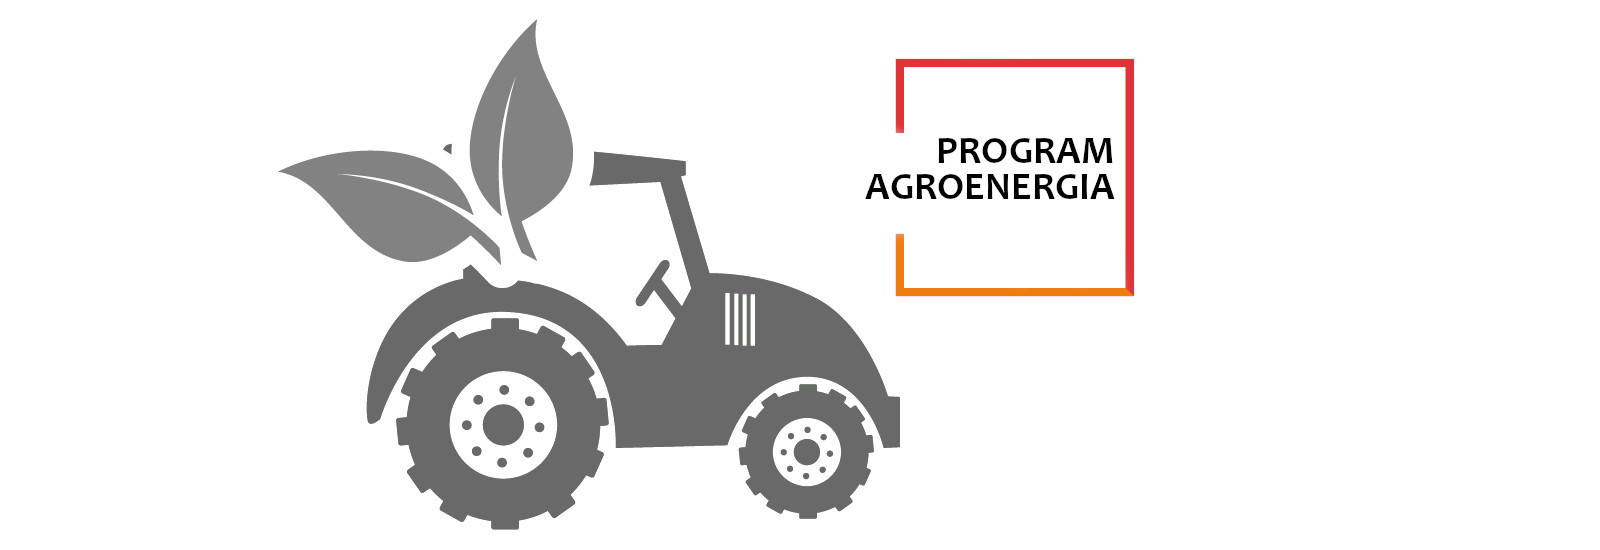 Program Agroenergia